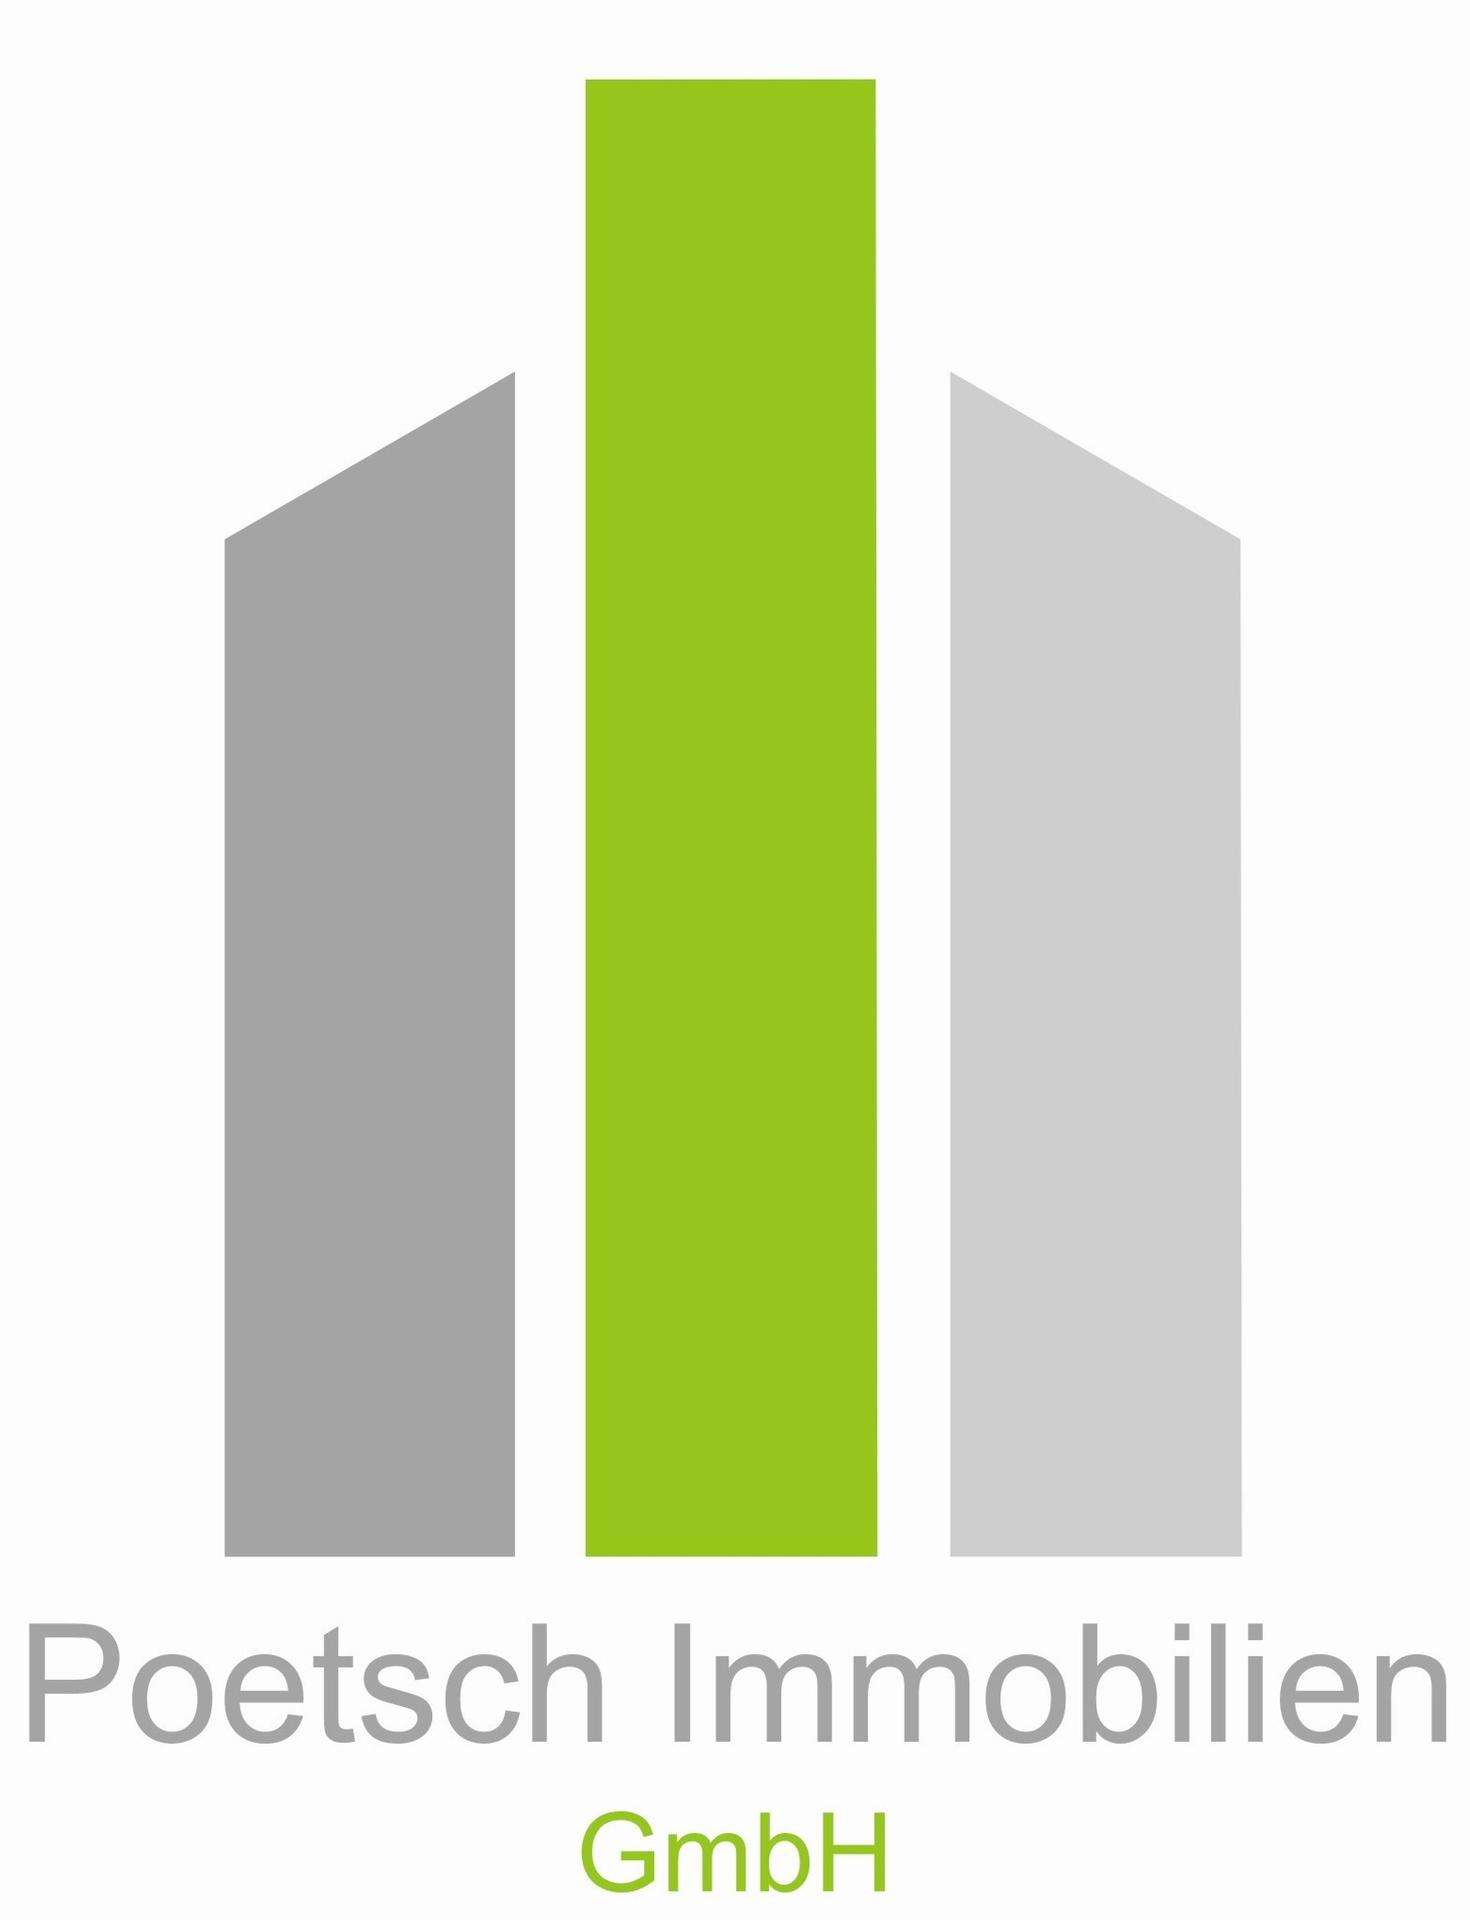 Makler Poetsch Immobilien GmbH logo